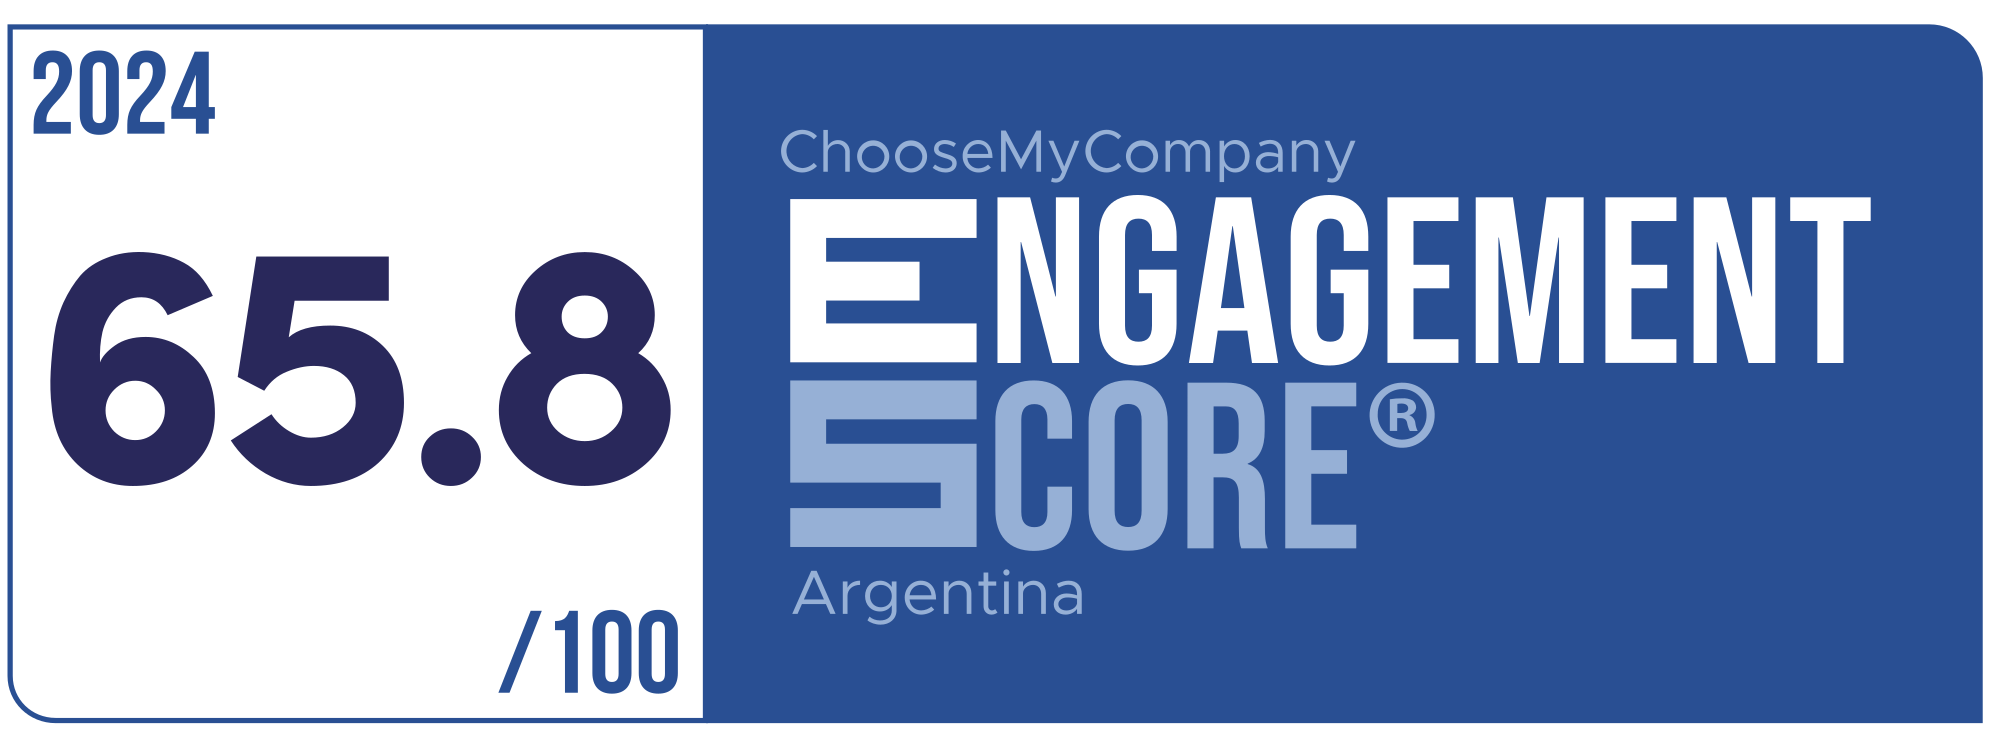 Label Engagement Score 2024 Argentina